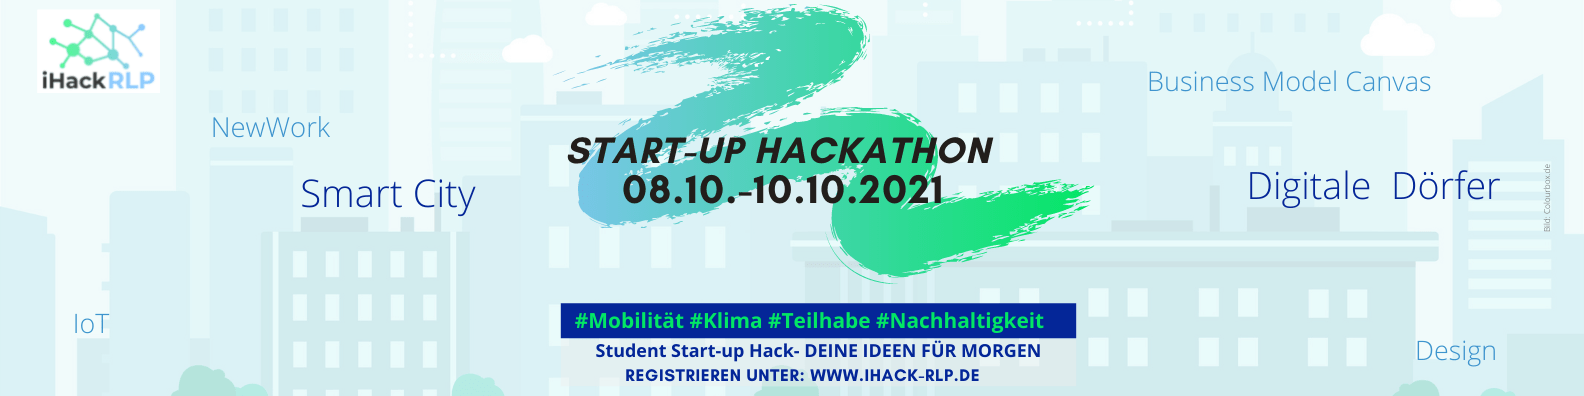 Start-up Hackathon 2021